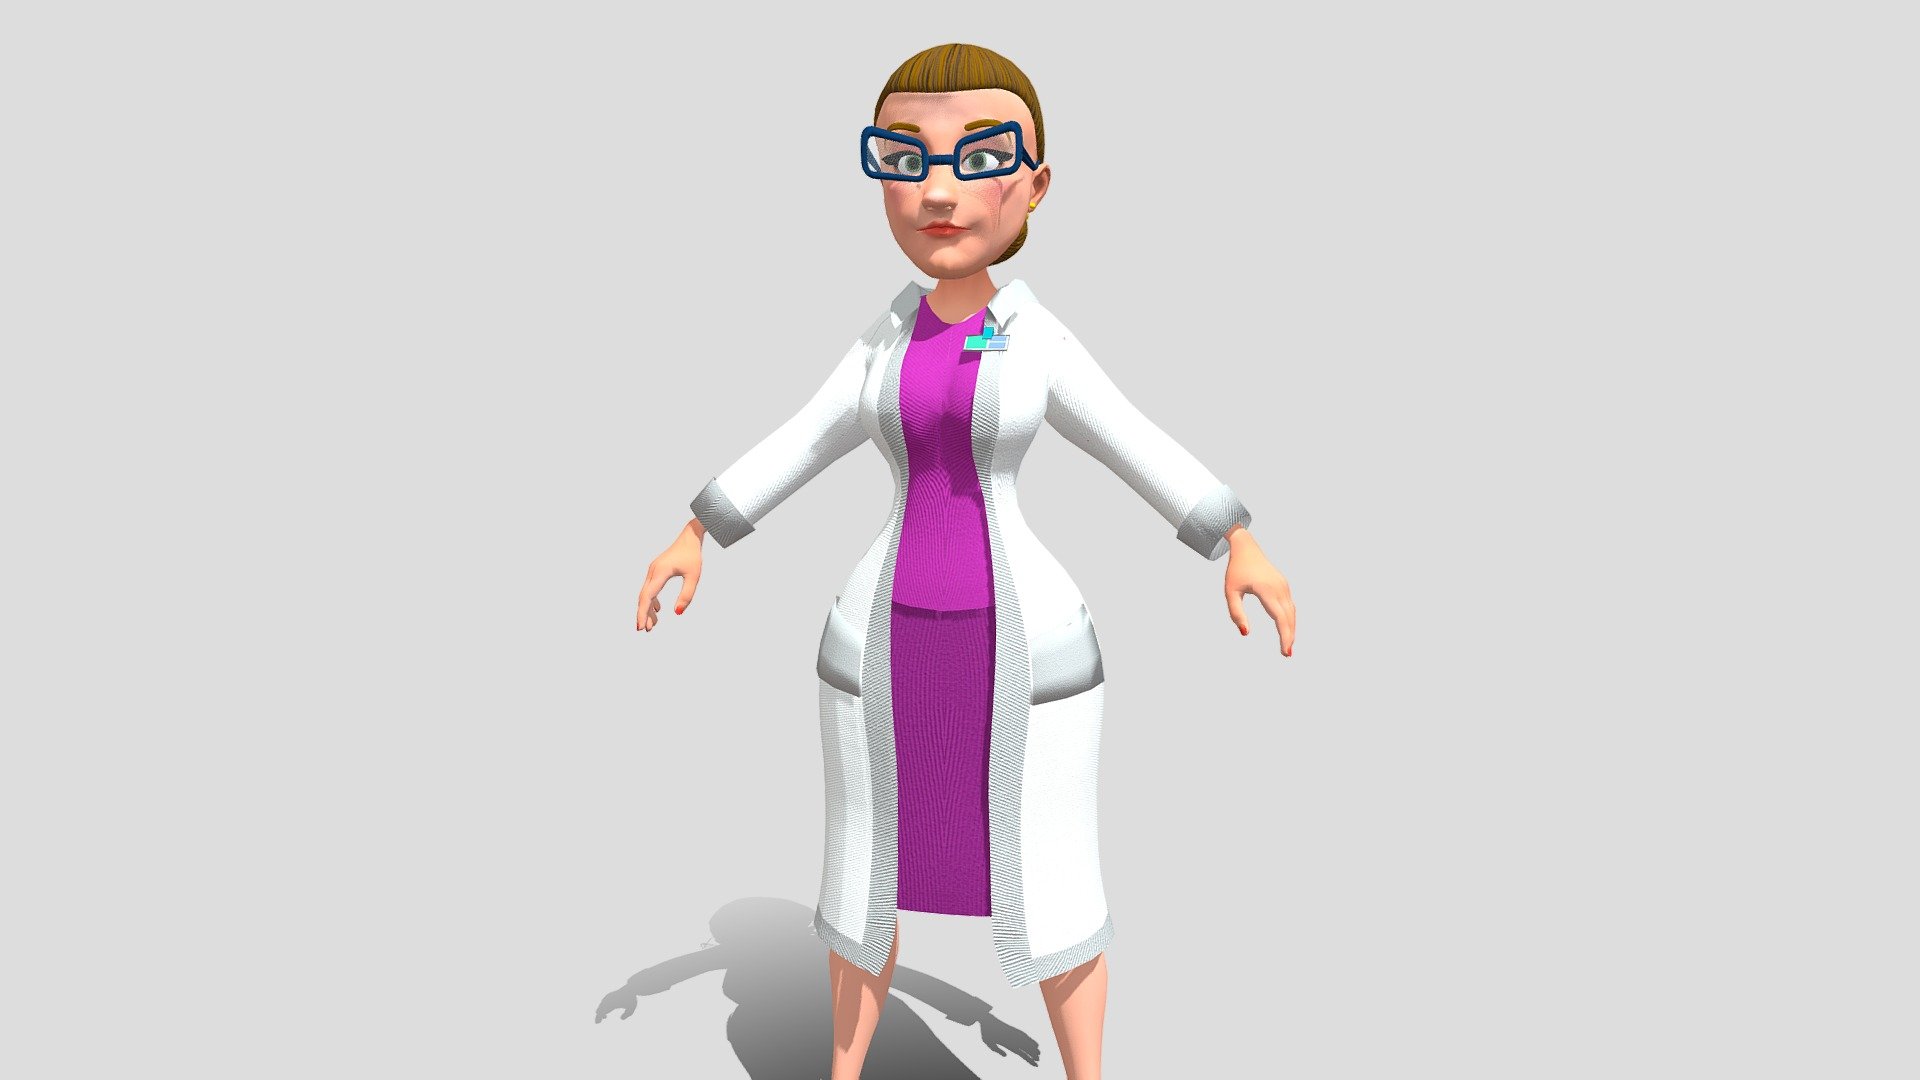 Doctor scientist 3d game cartoon character - Doctor scientist 3d game cartoon character - 3D model by Agarkova_CG 3d model